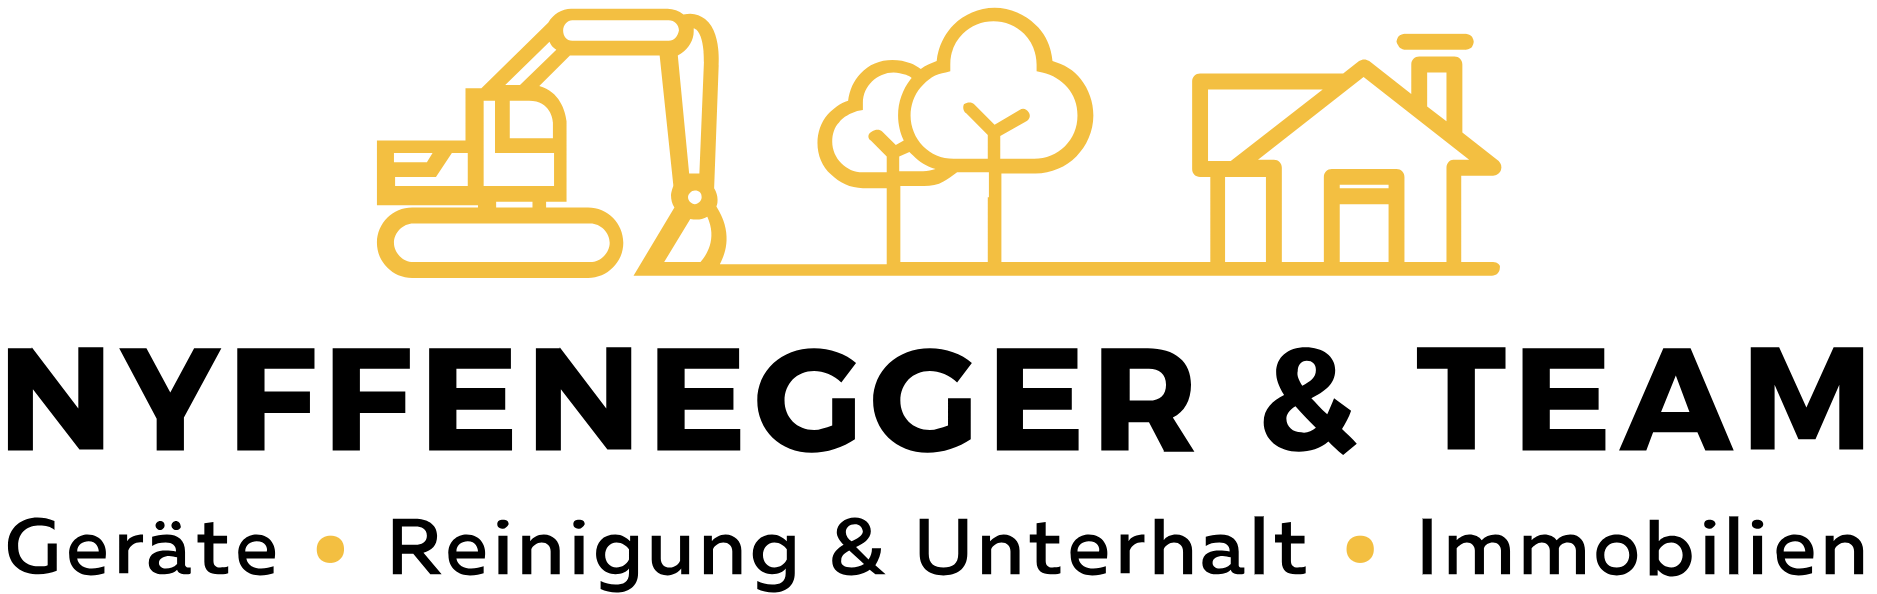 Nyffenegger & Team GmbH